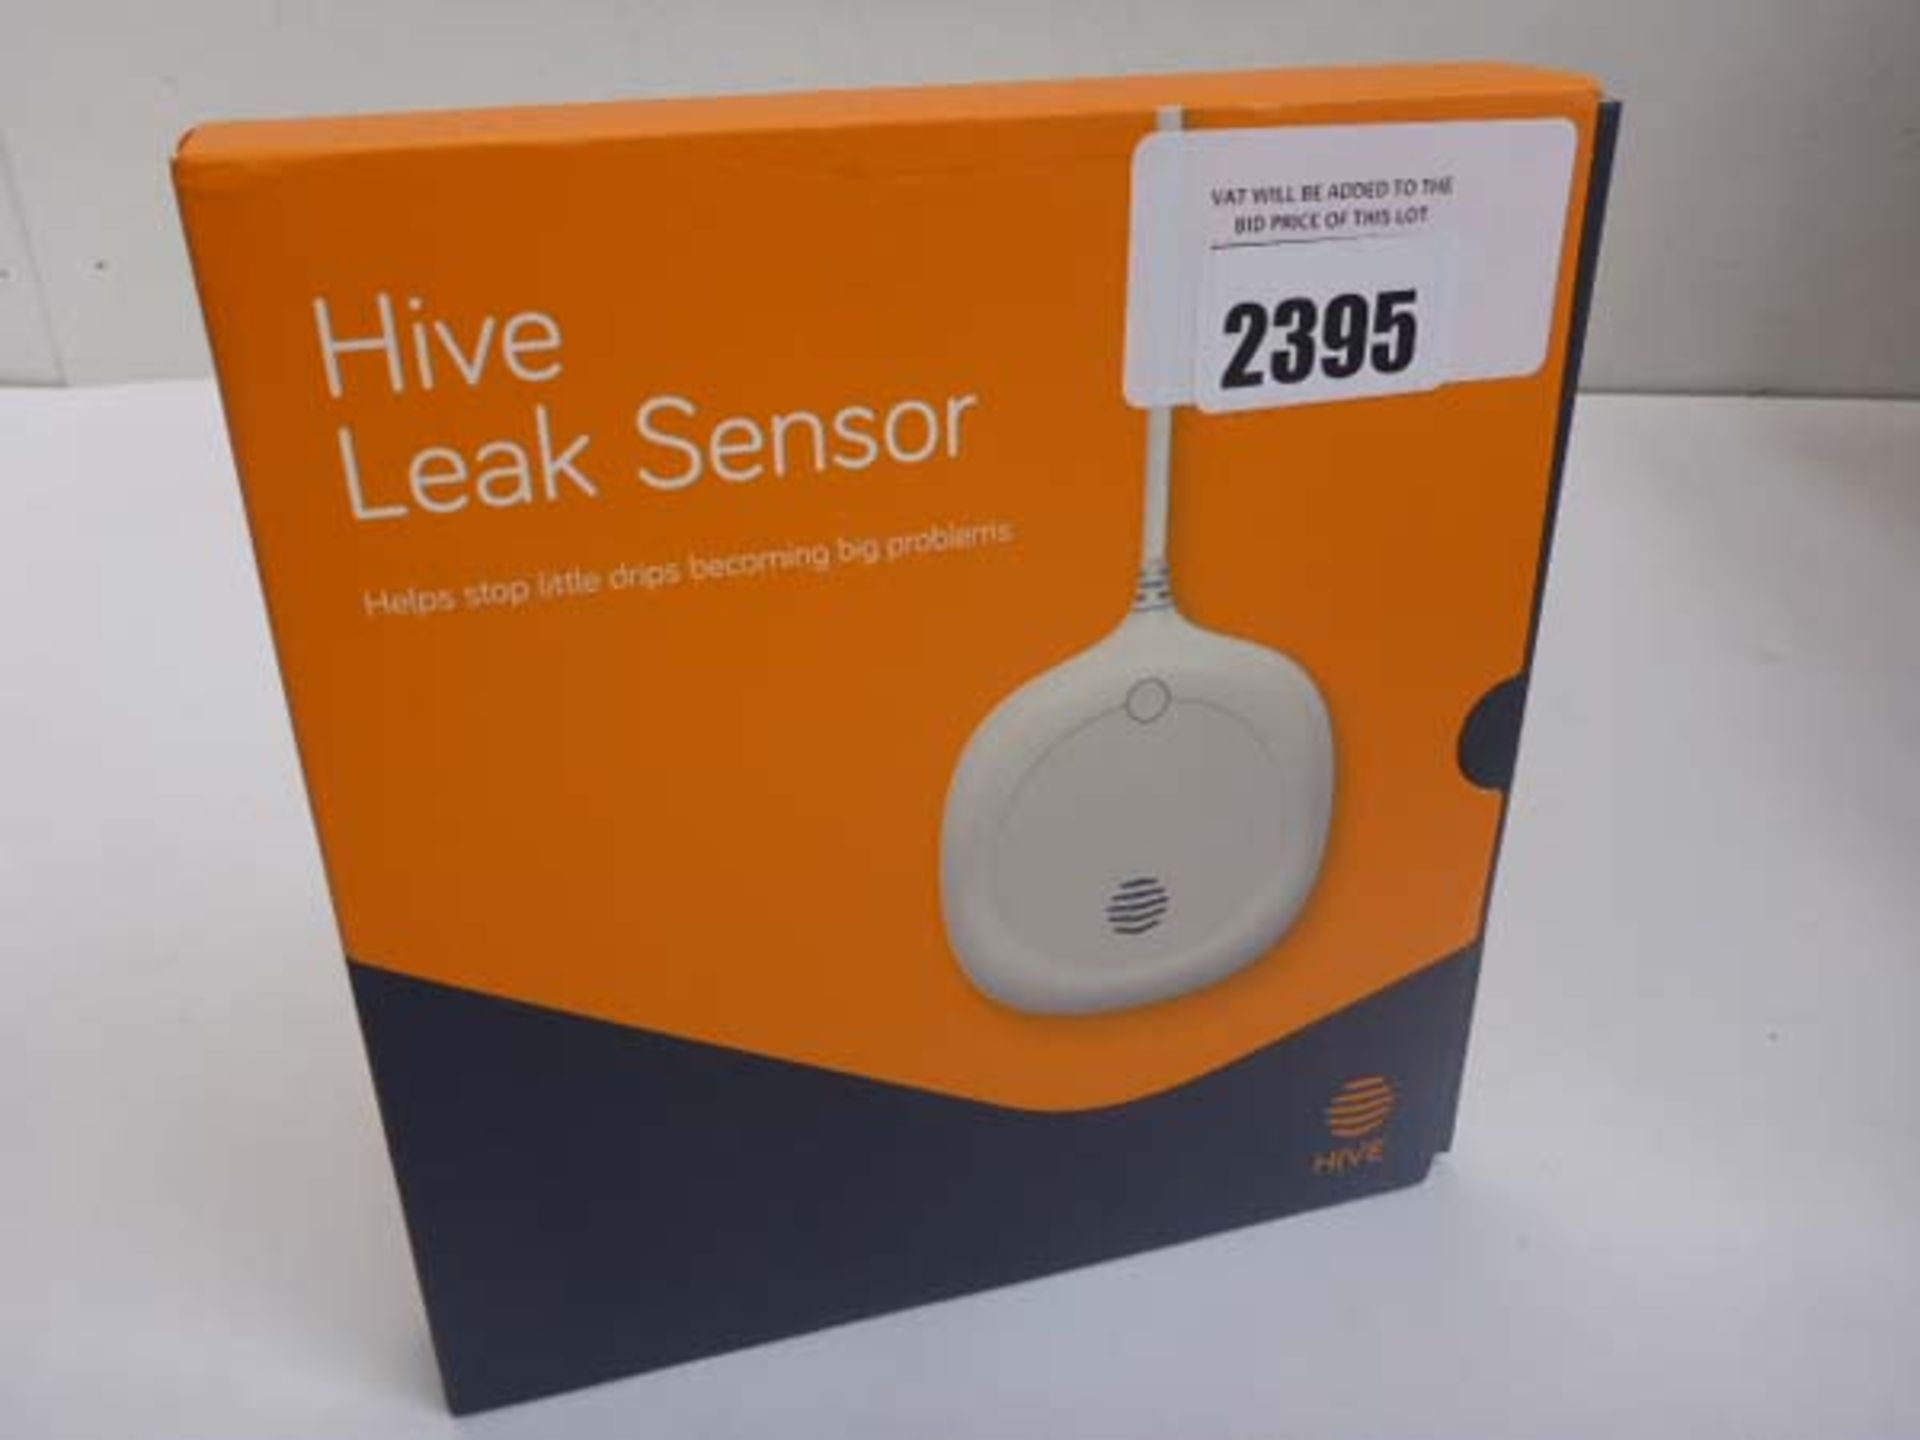 Hive active leak sensor in box.